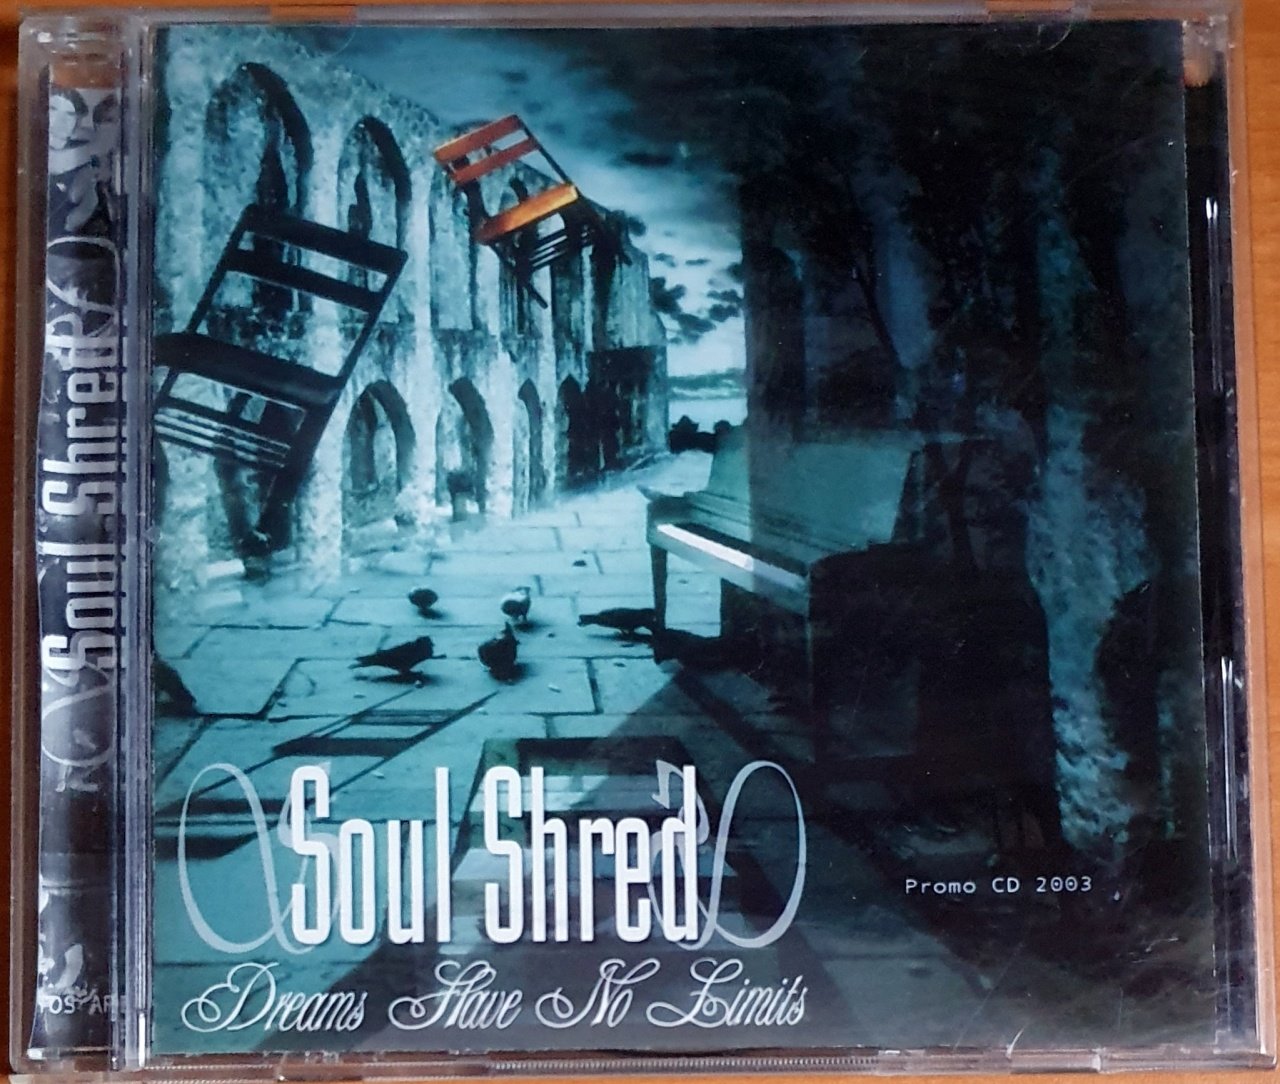 SOUL SHRED - DREAMS HAVE NO LIMITS (2003) - CDR PROMO 2.EL